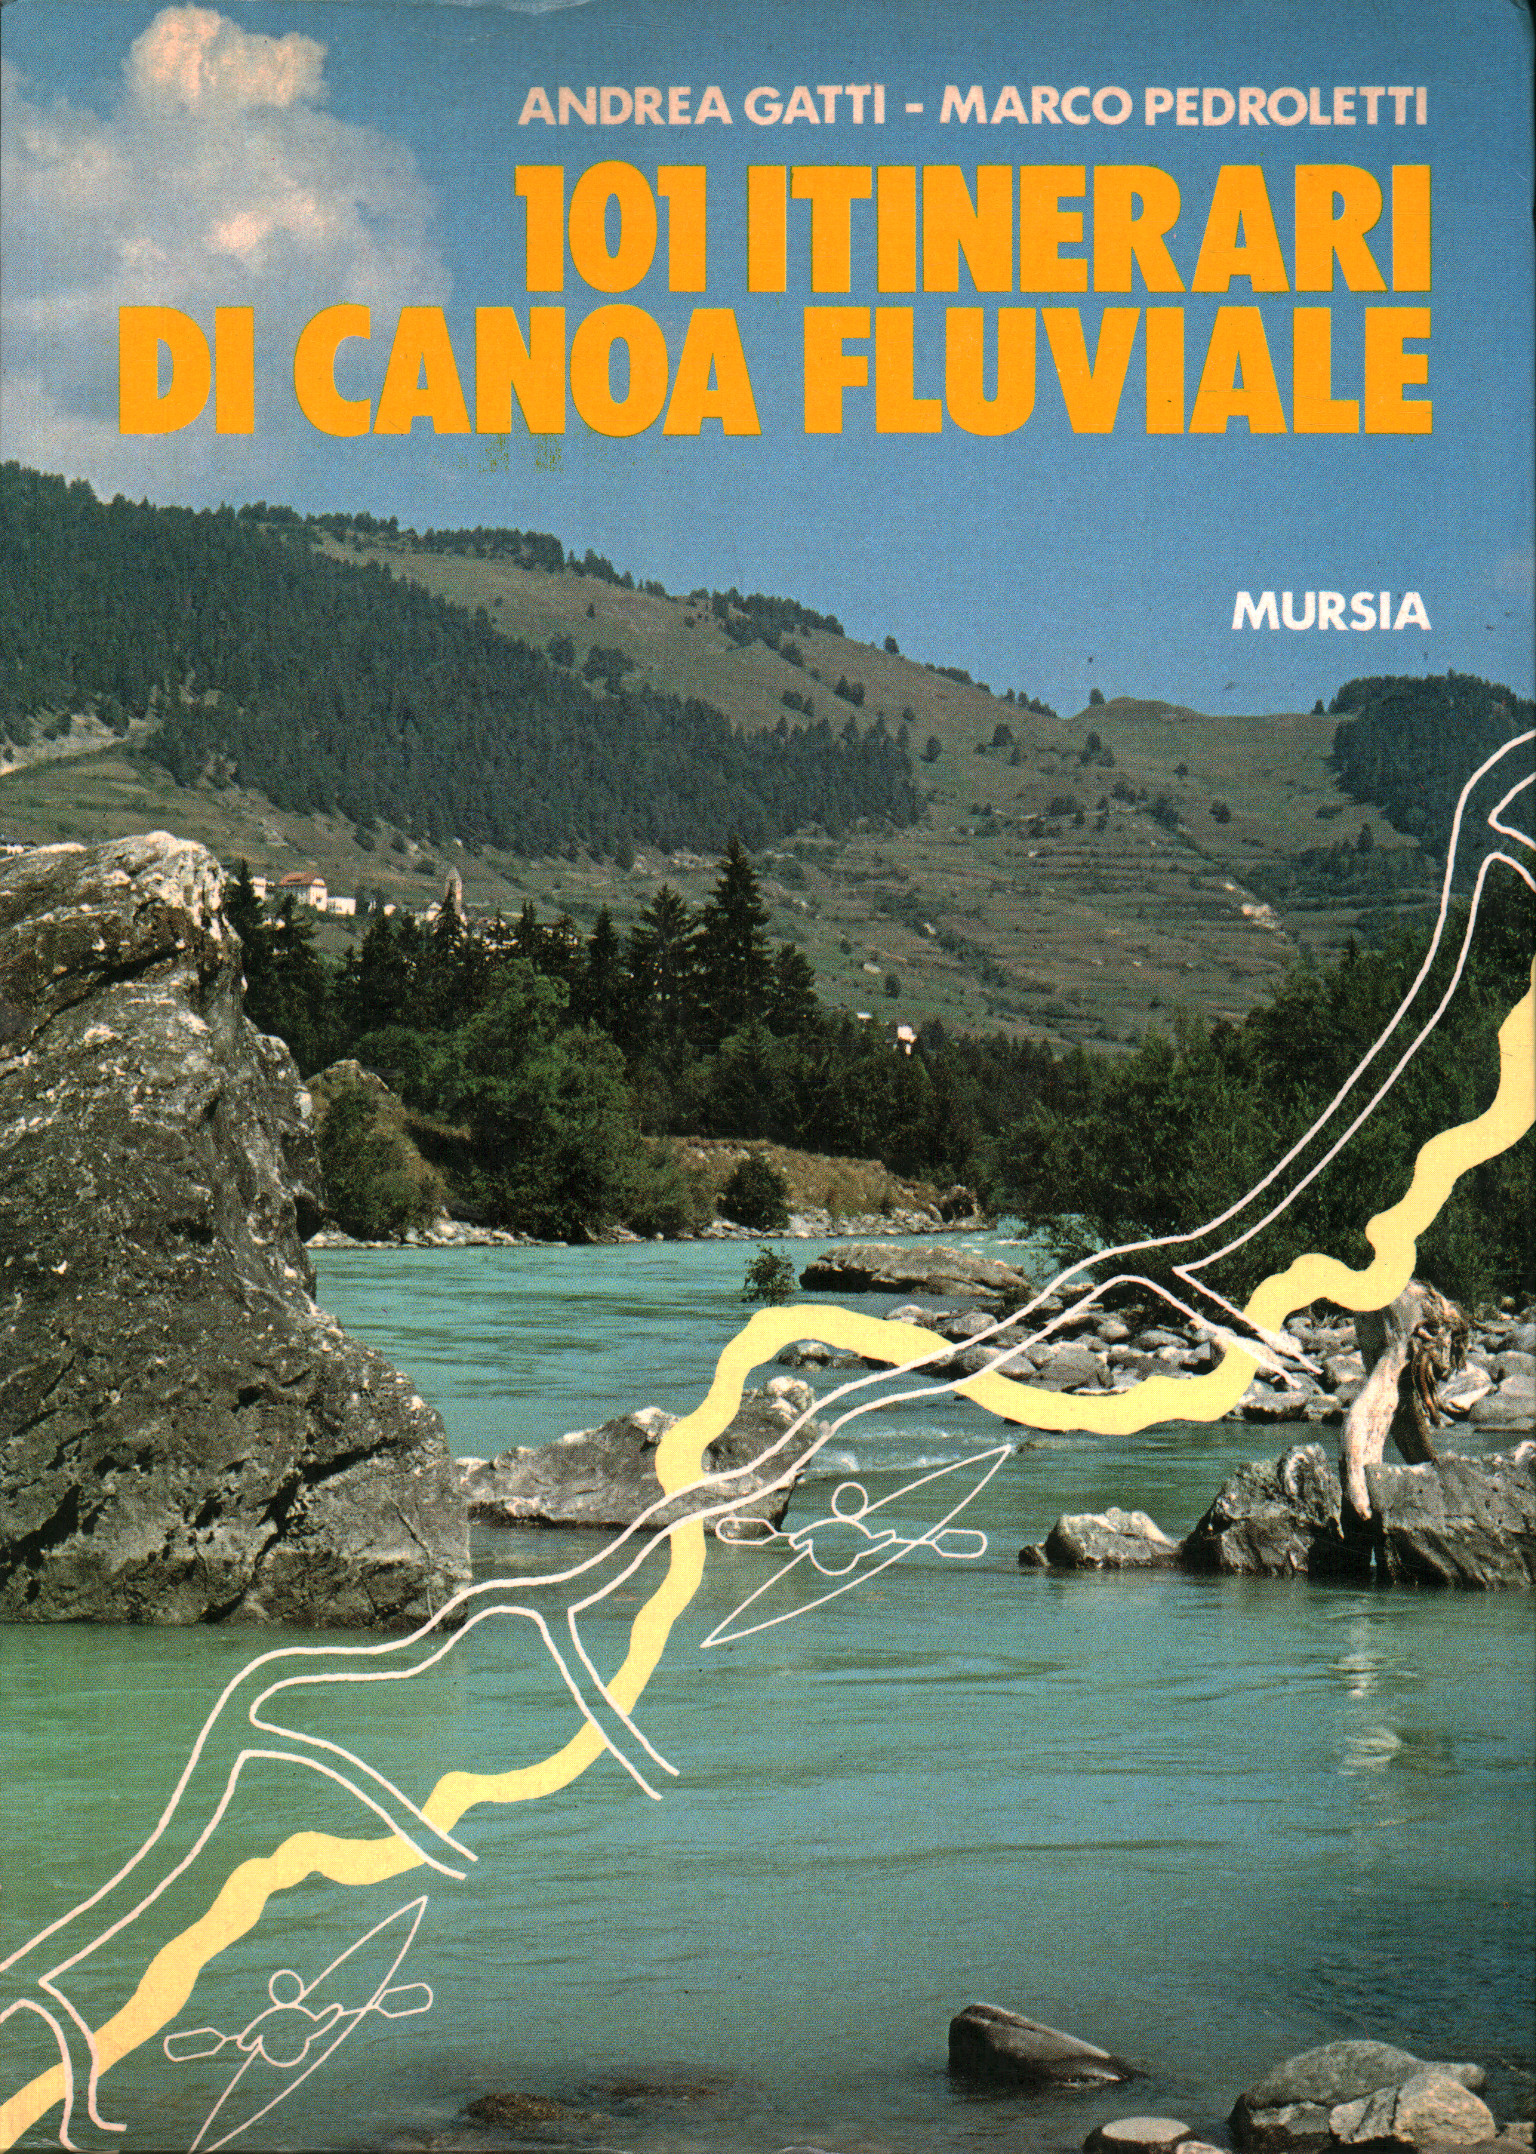 101 routes, canoeing on the river, Andrea Gatti, Marco Pedroletti